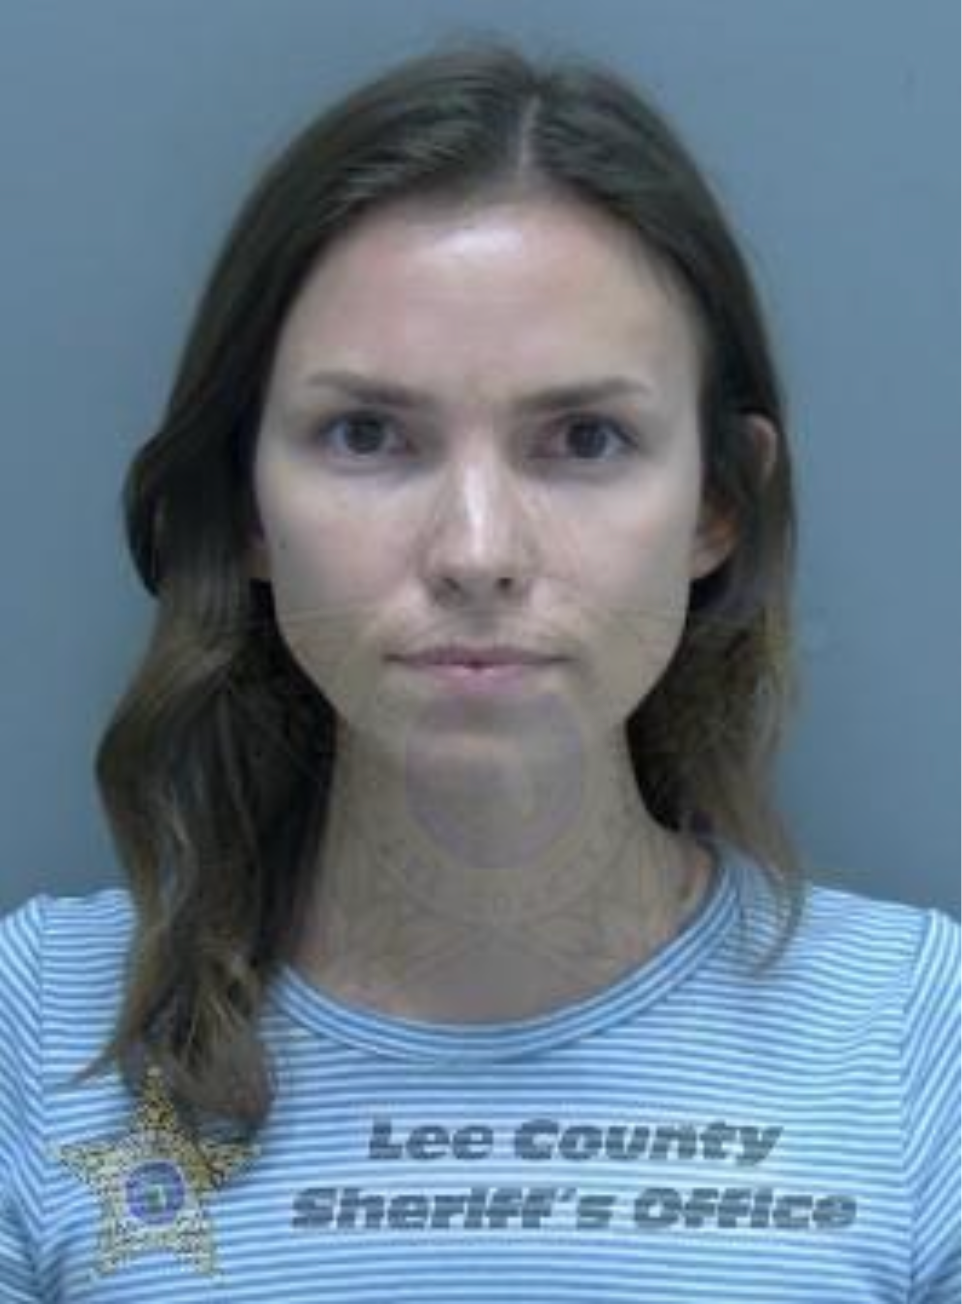 Police said Annika Olson violated two Florida statutes